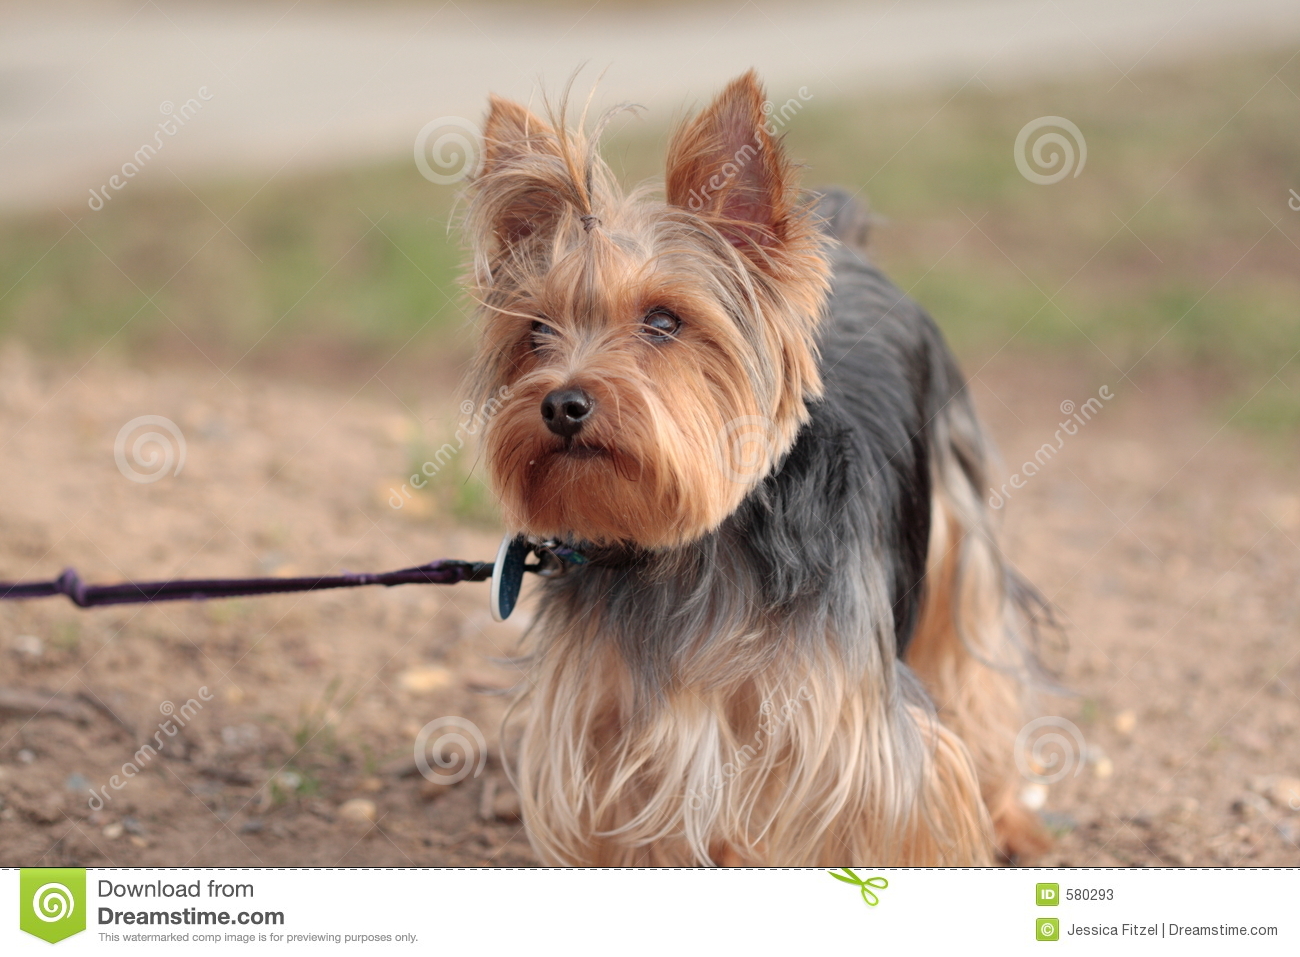 Yorkie Dog On Leash Ready To Go For A Walk